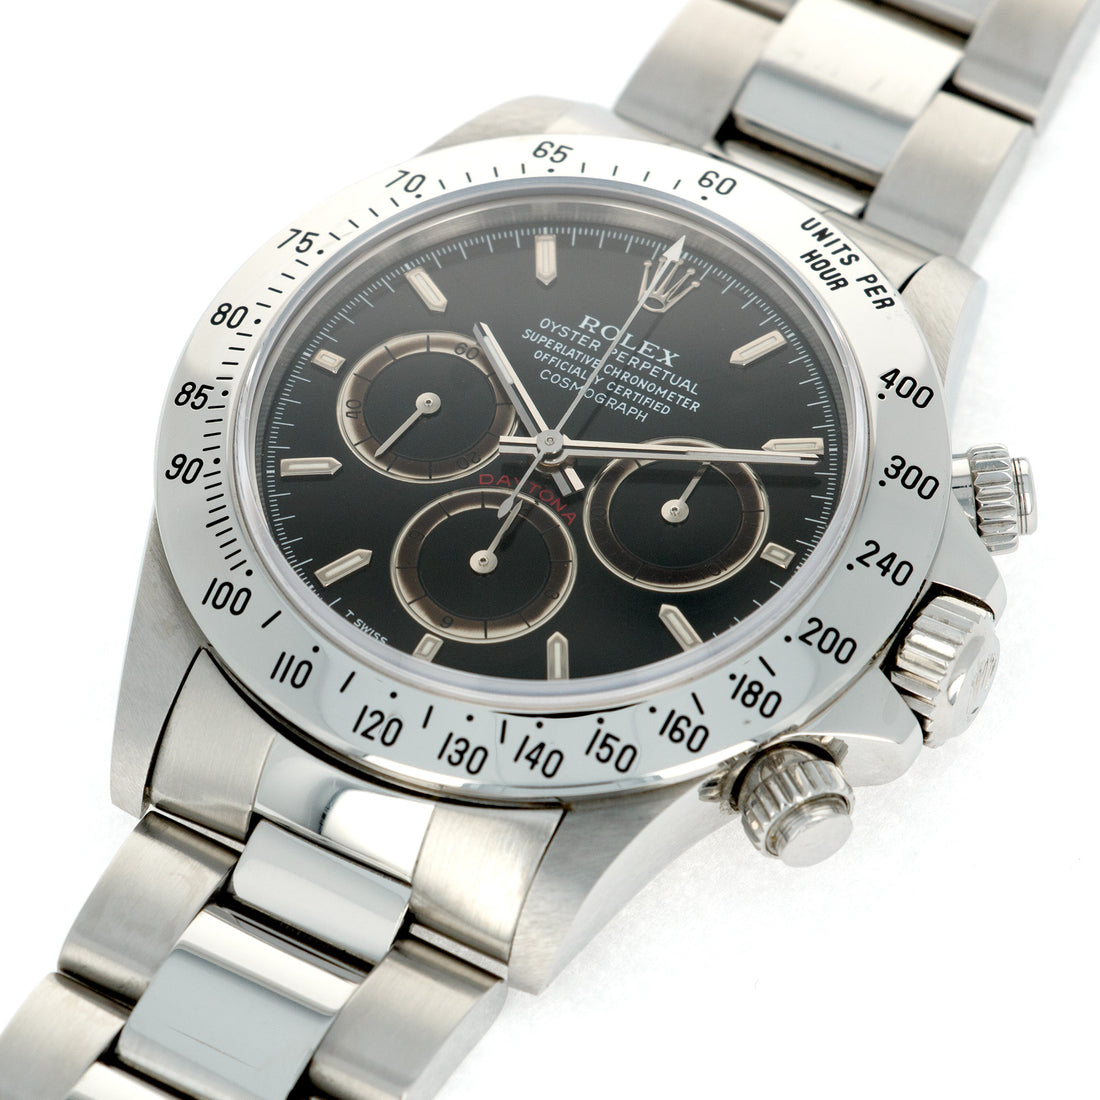 Rolex Cosmograph Daytona Patrizzi Watch Ref. 16520